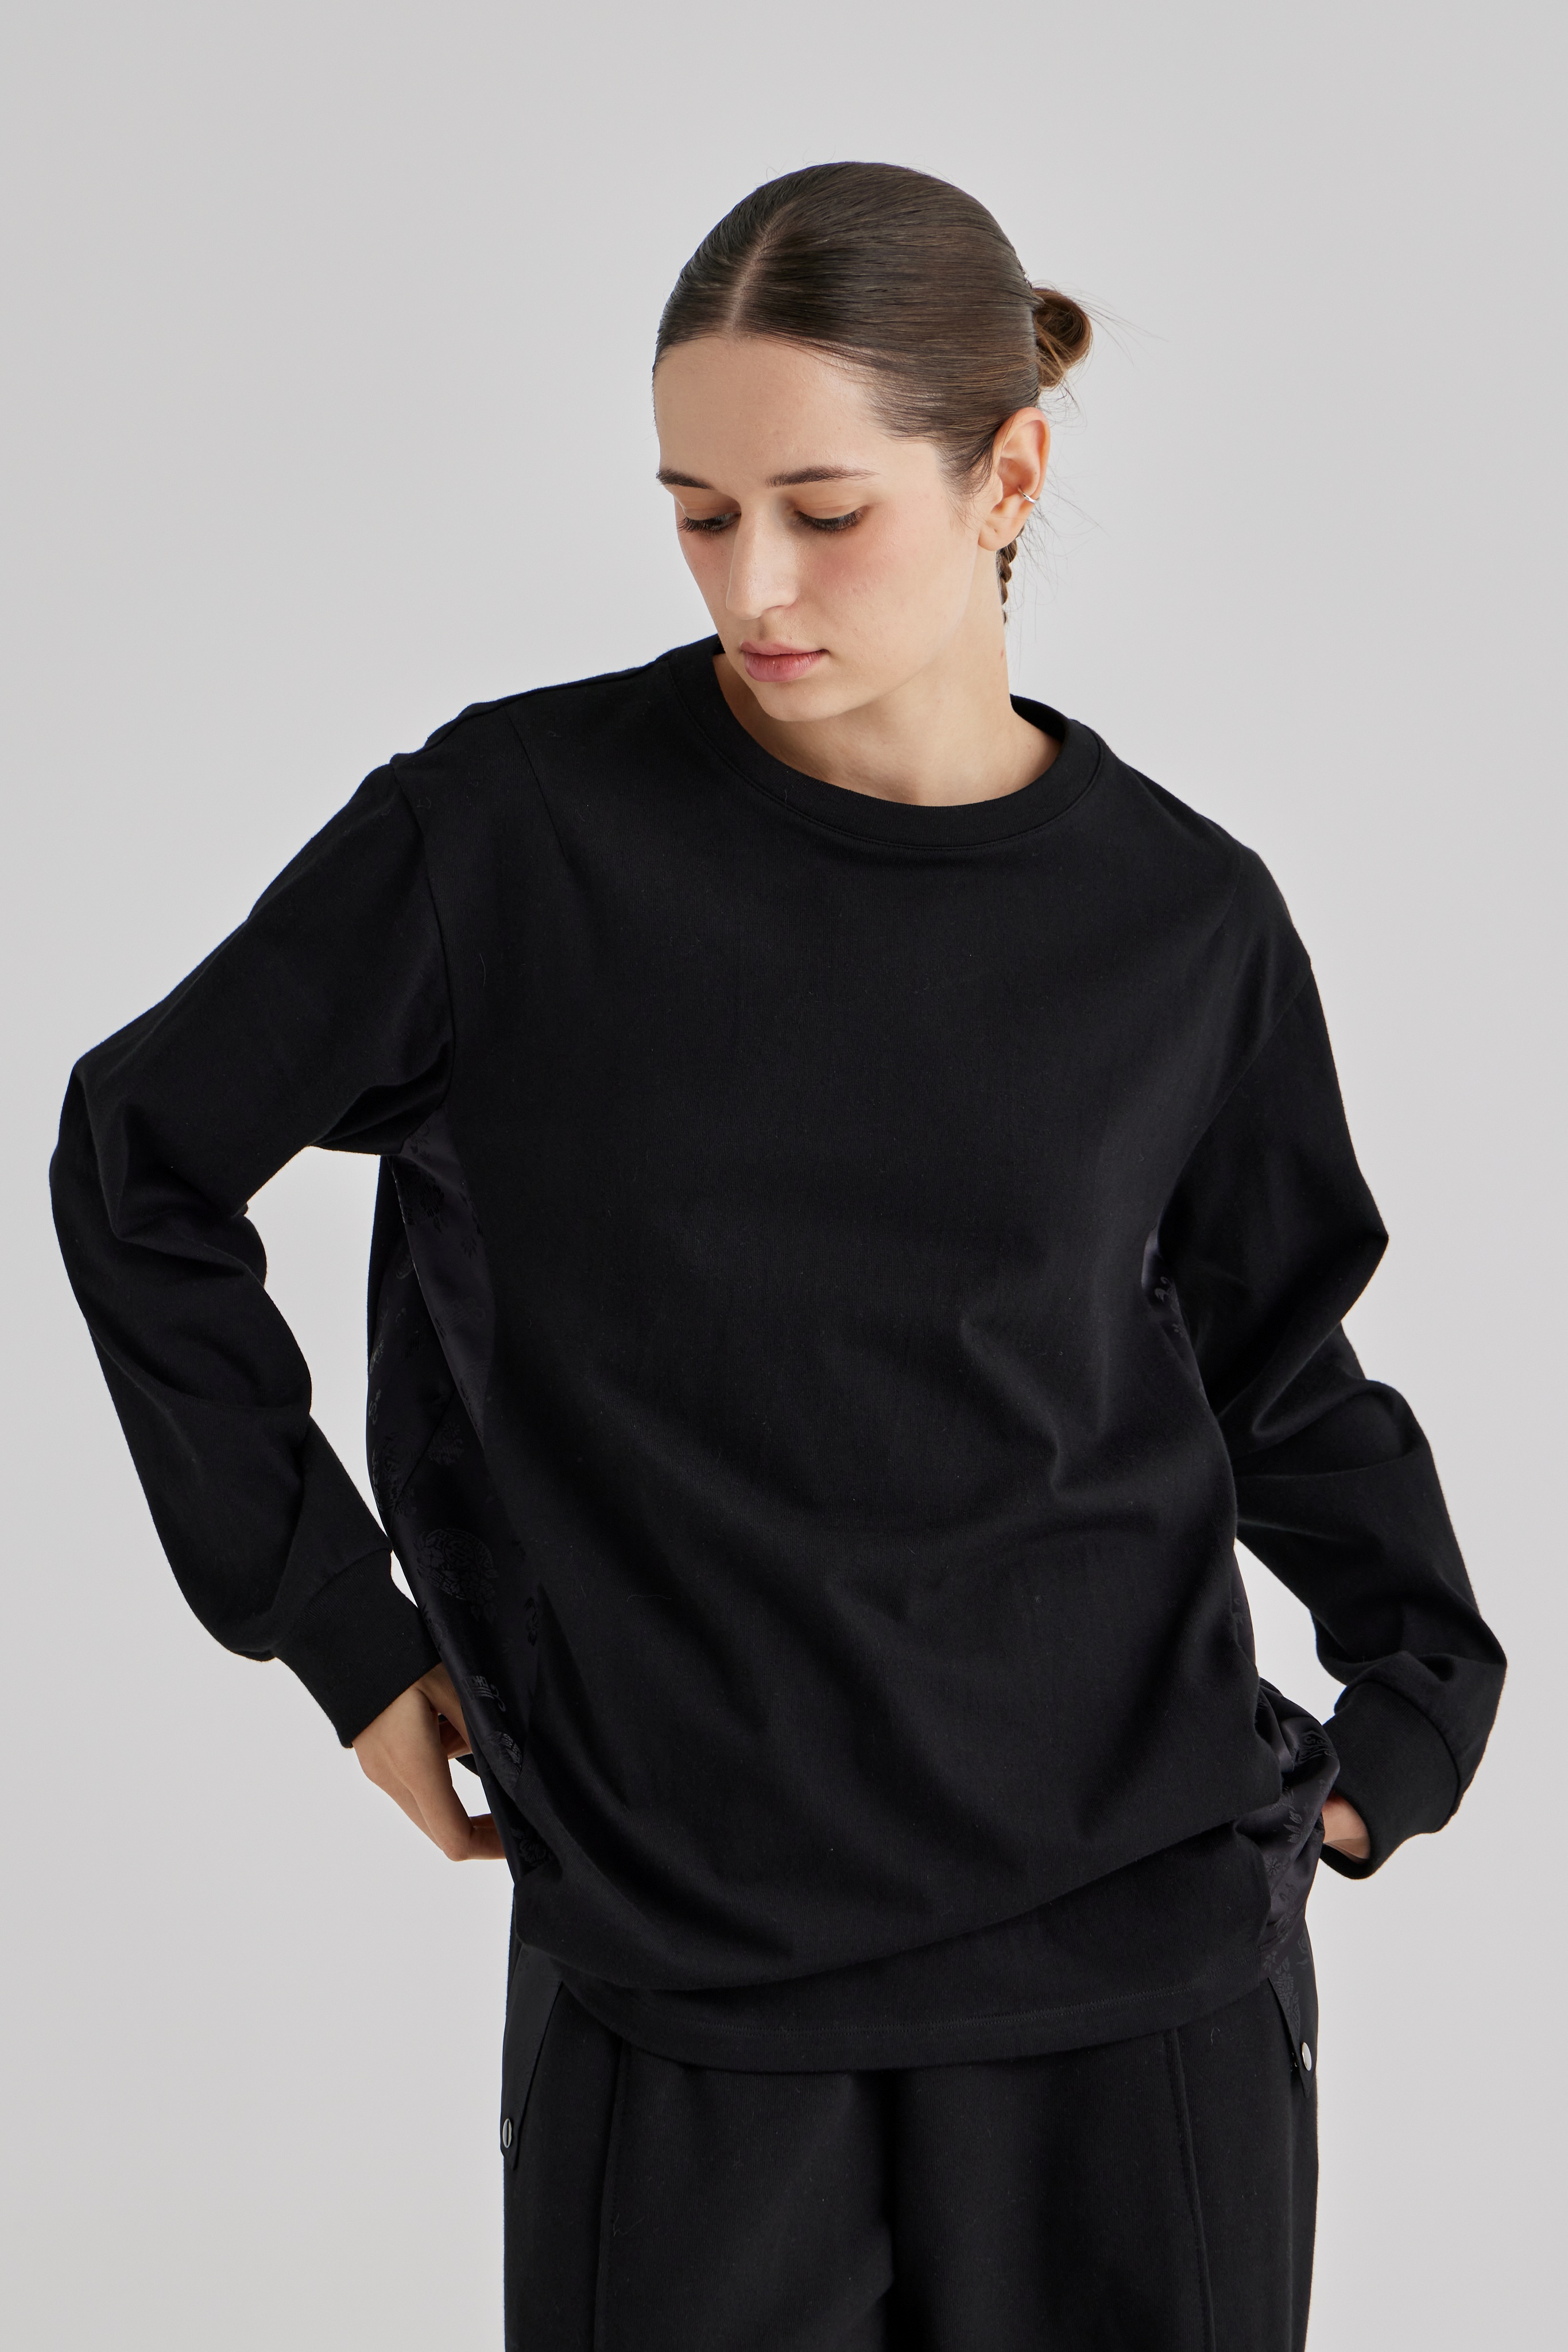 Pin-tuck  Hanbok Long Sleeve t-shirt (Black)